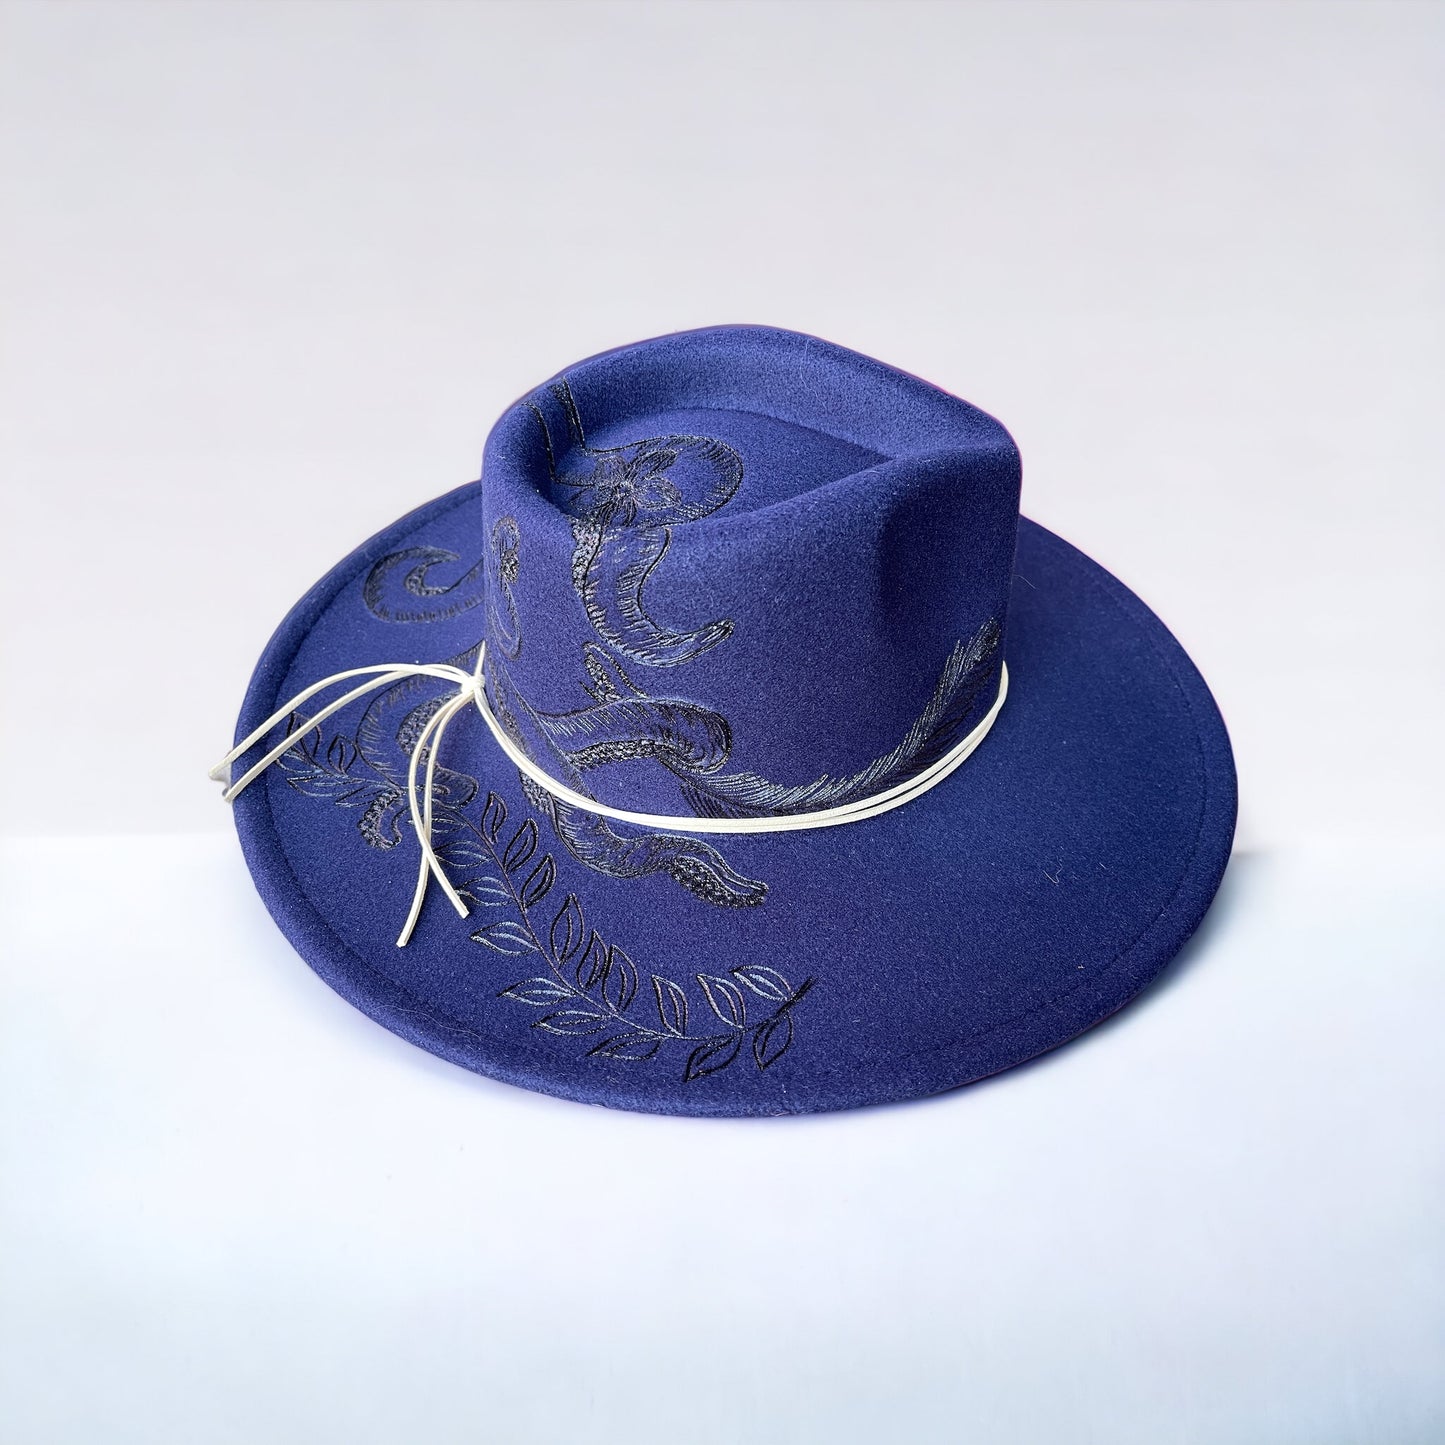 The Kracken- Burned Rancher Style Hat